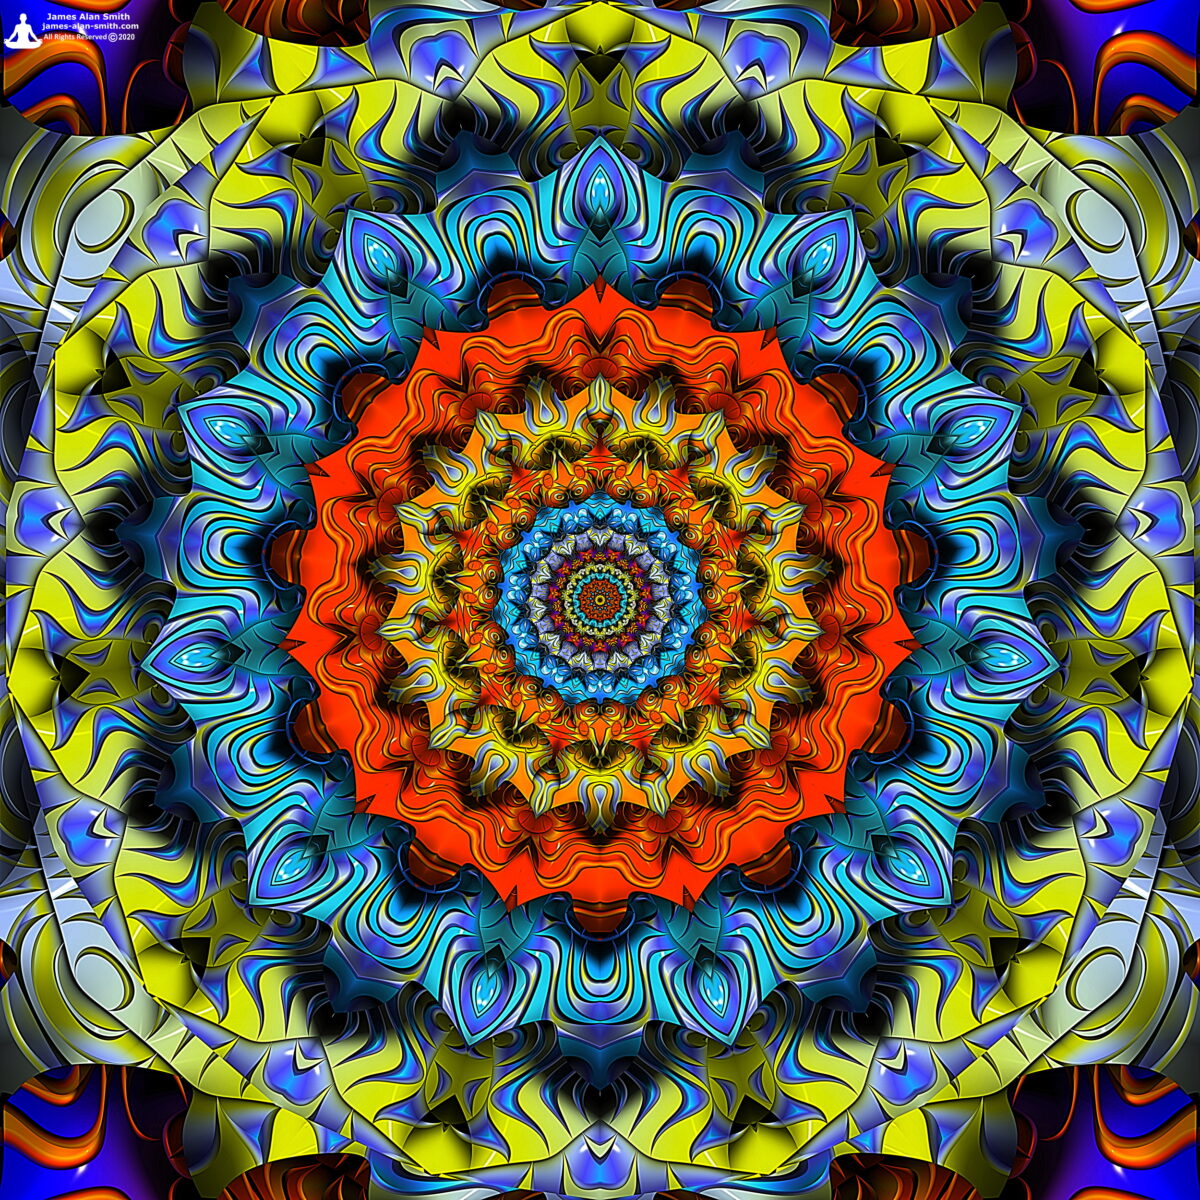 Unusual Mandala Series #05252020 Artwork by James Alan Smith